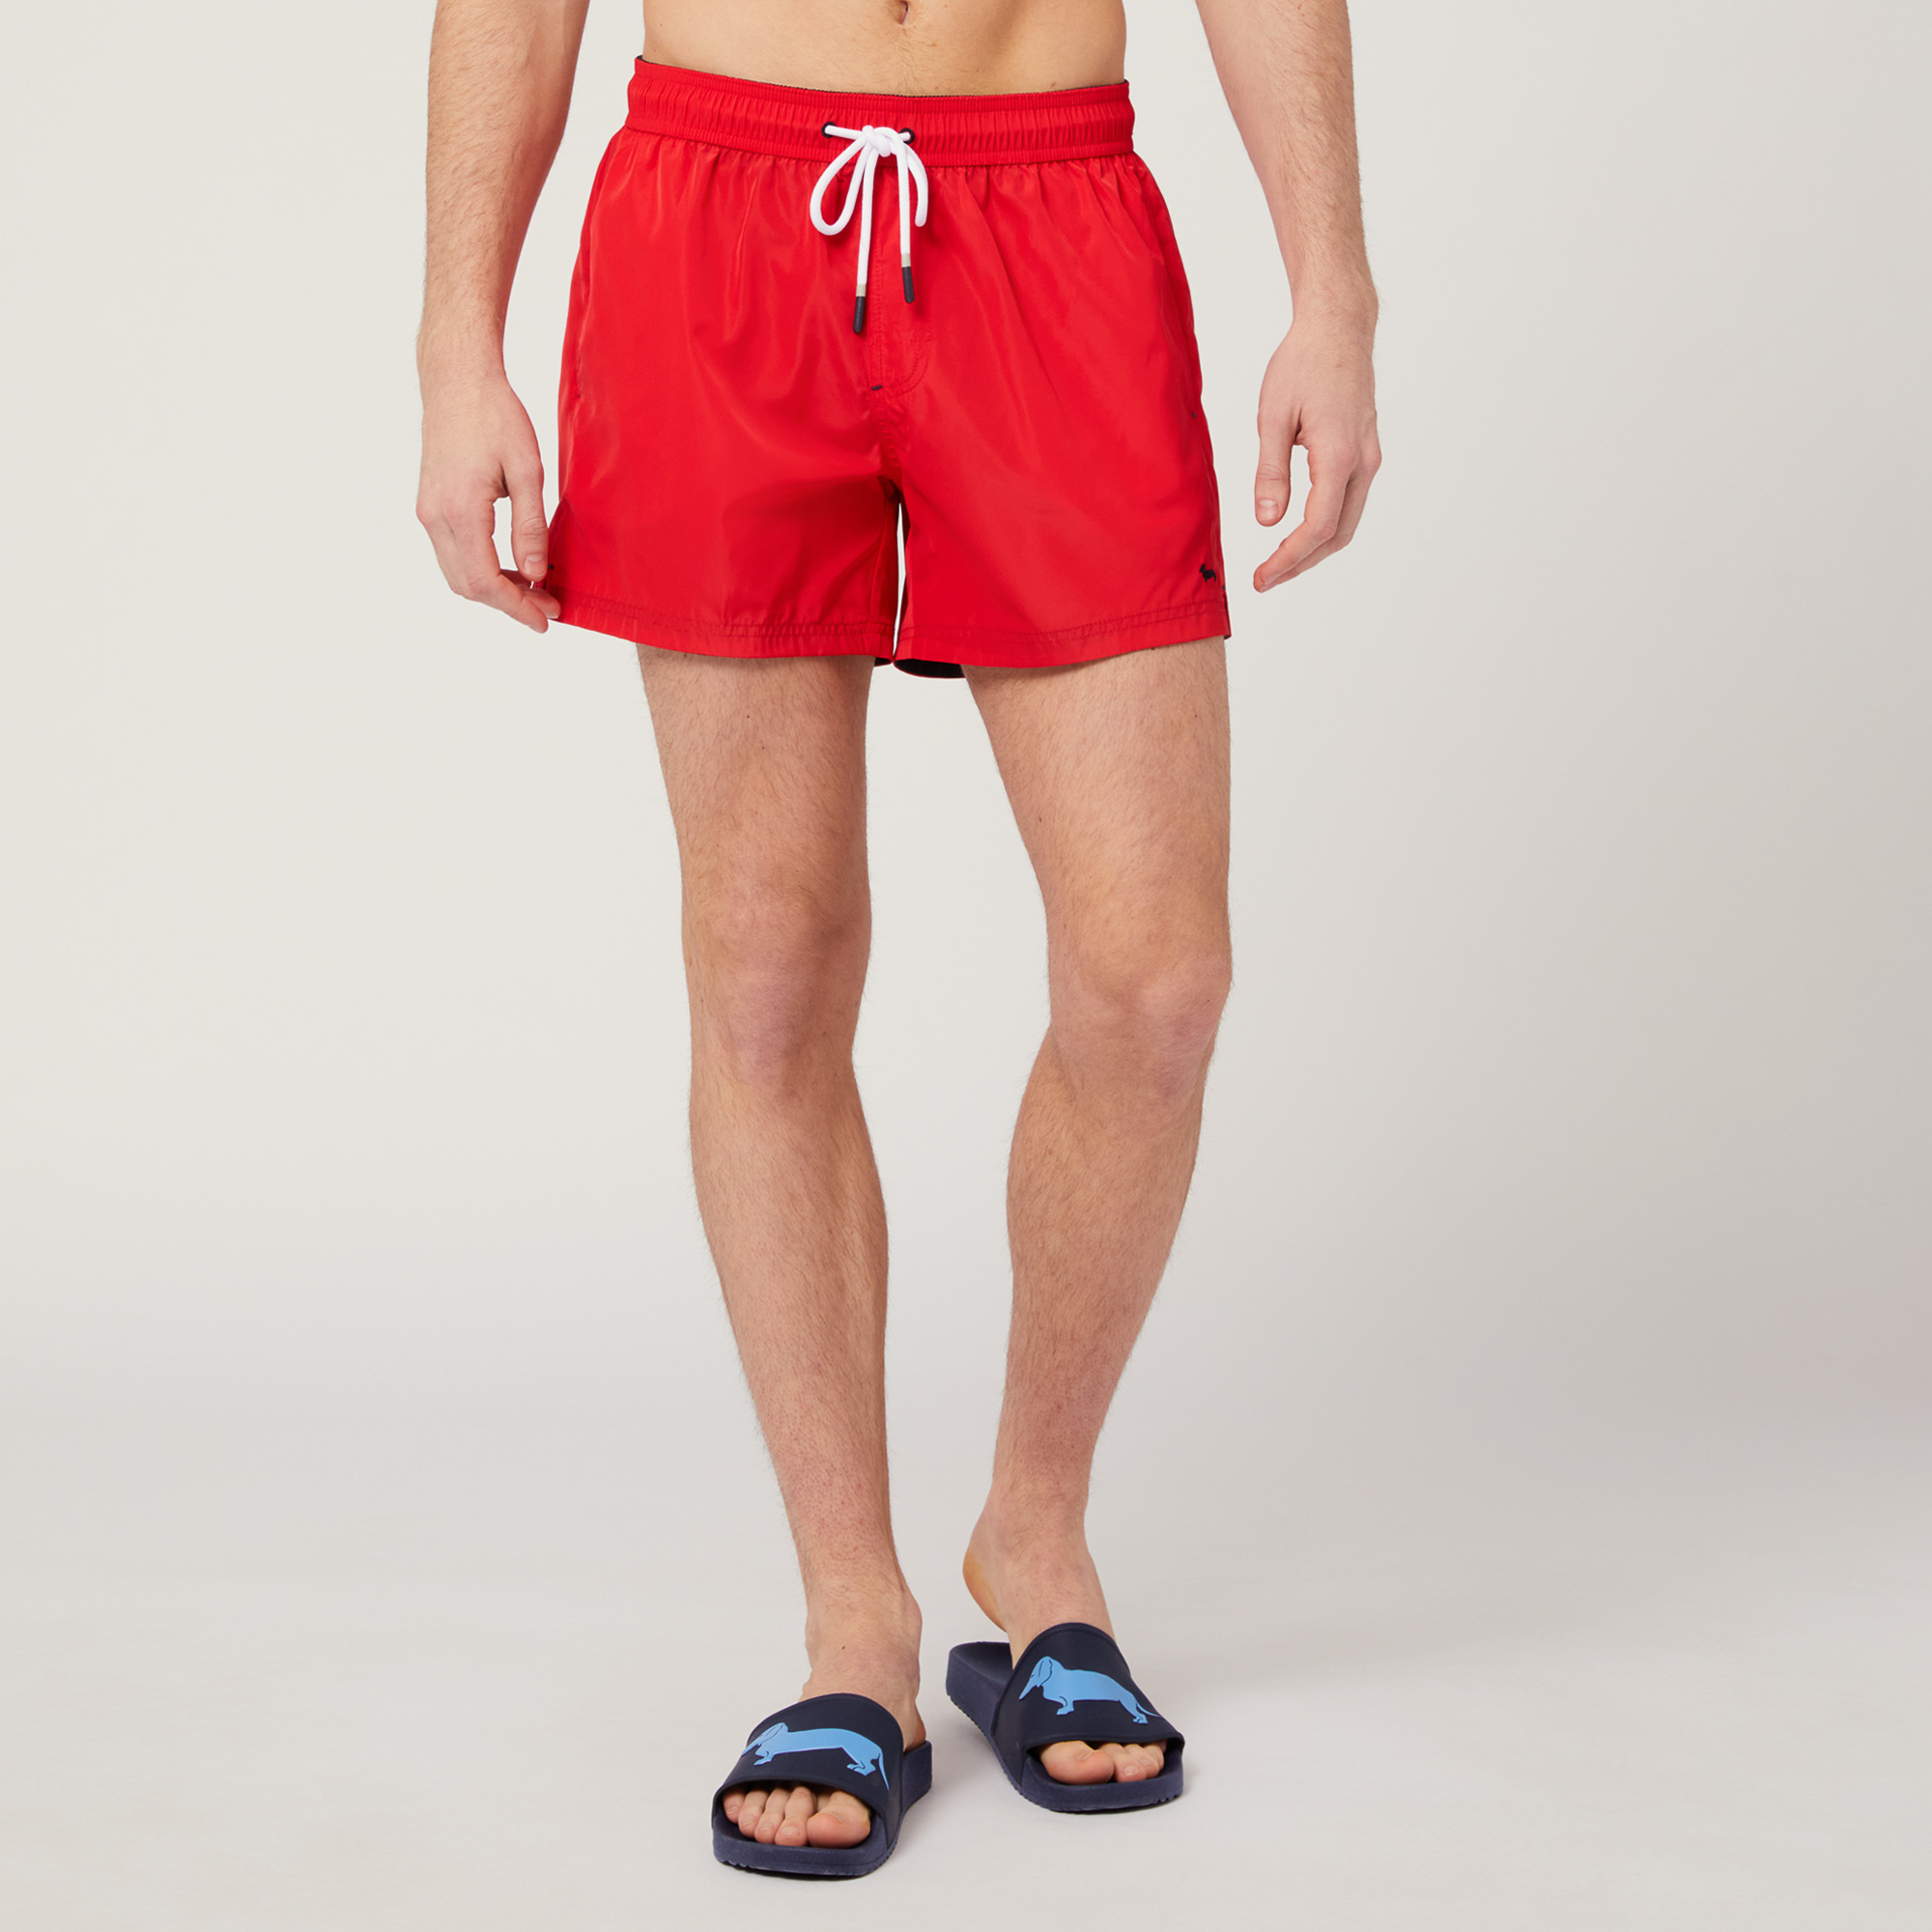 Short Swim Trunks, Red, large image number 0